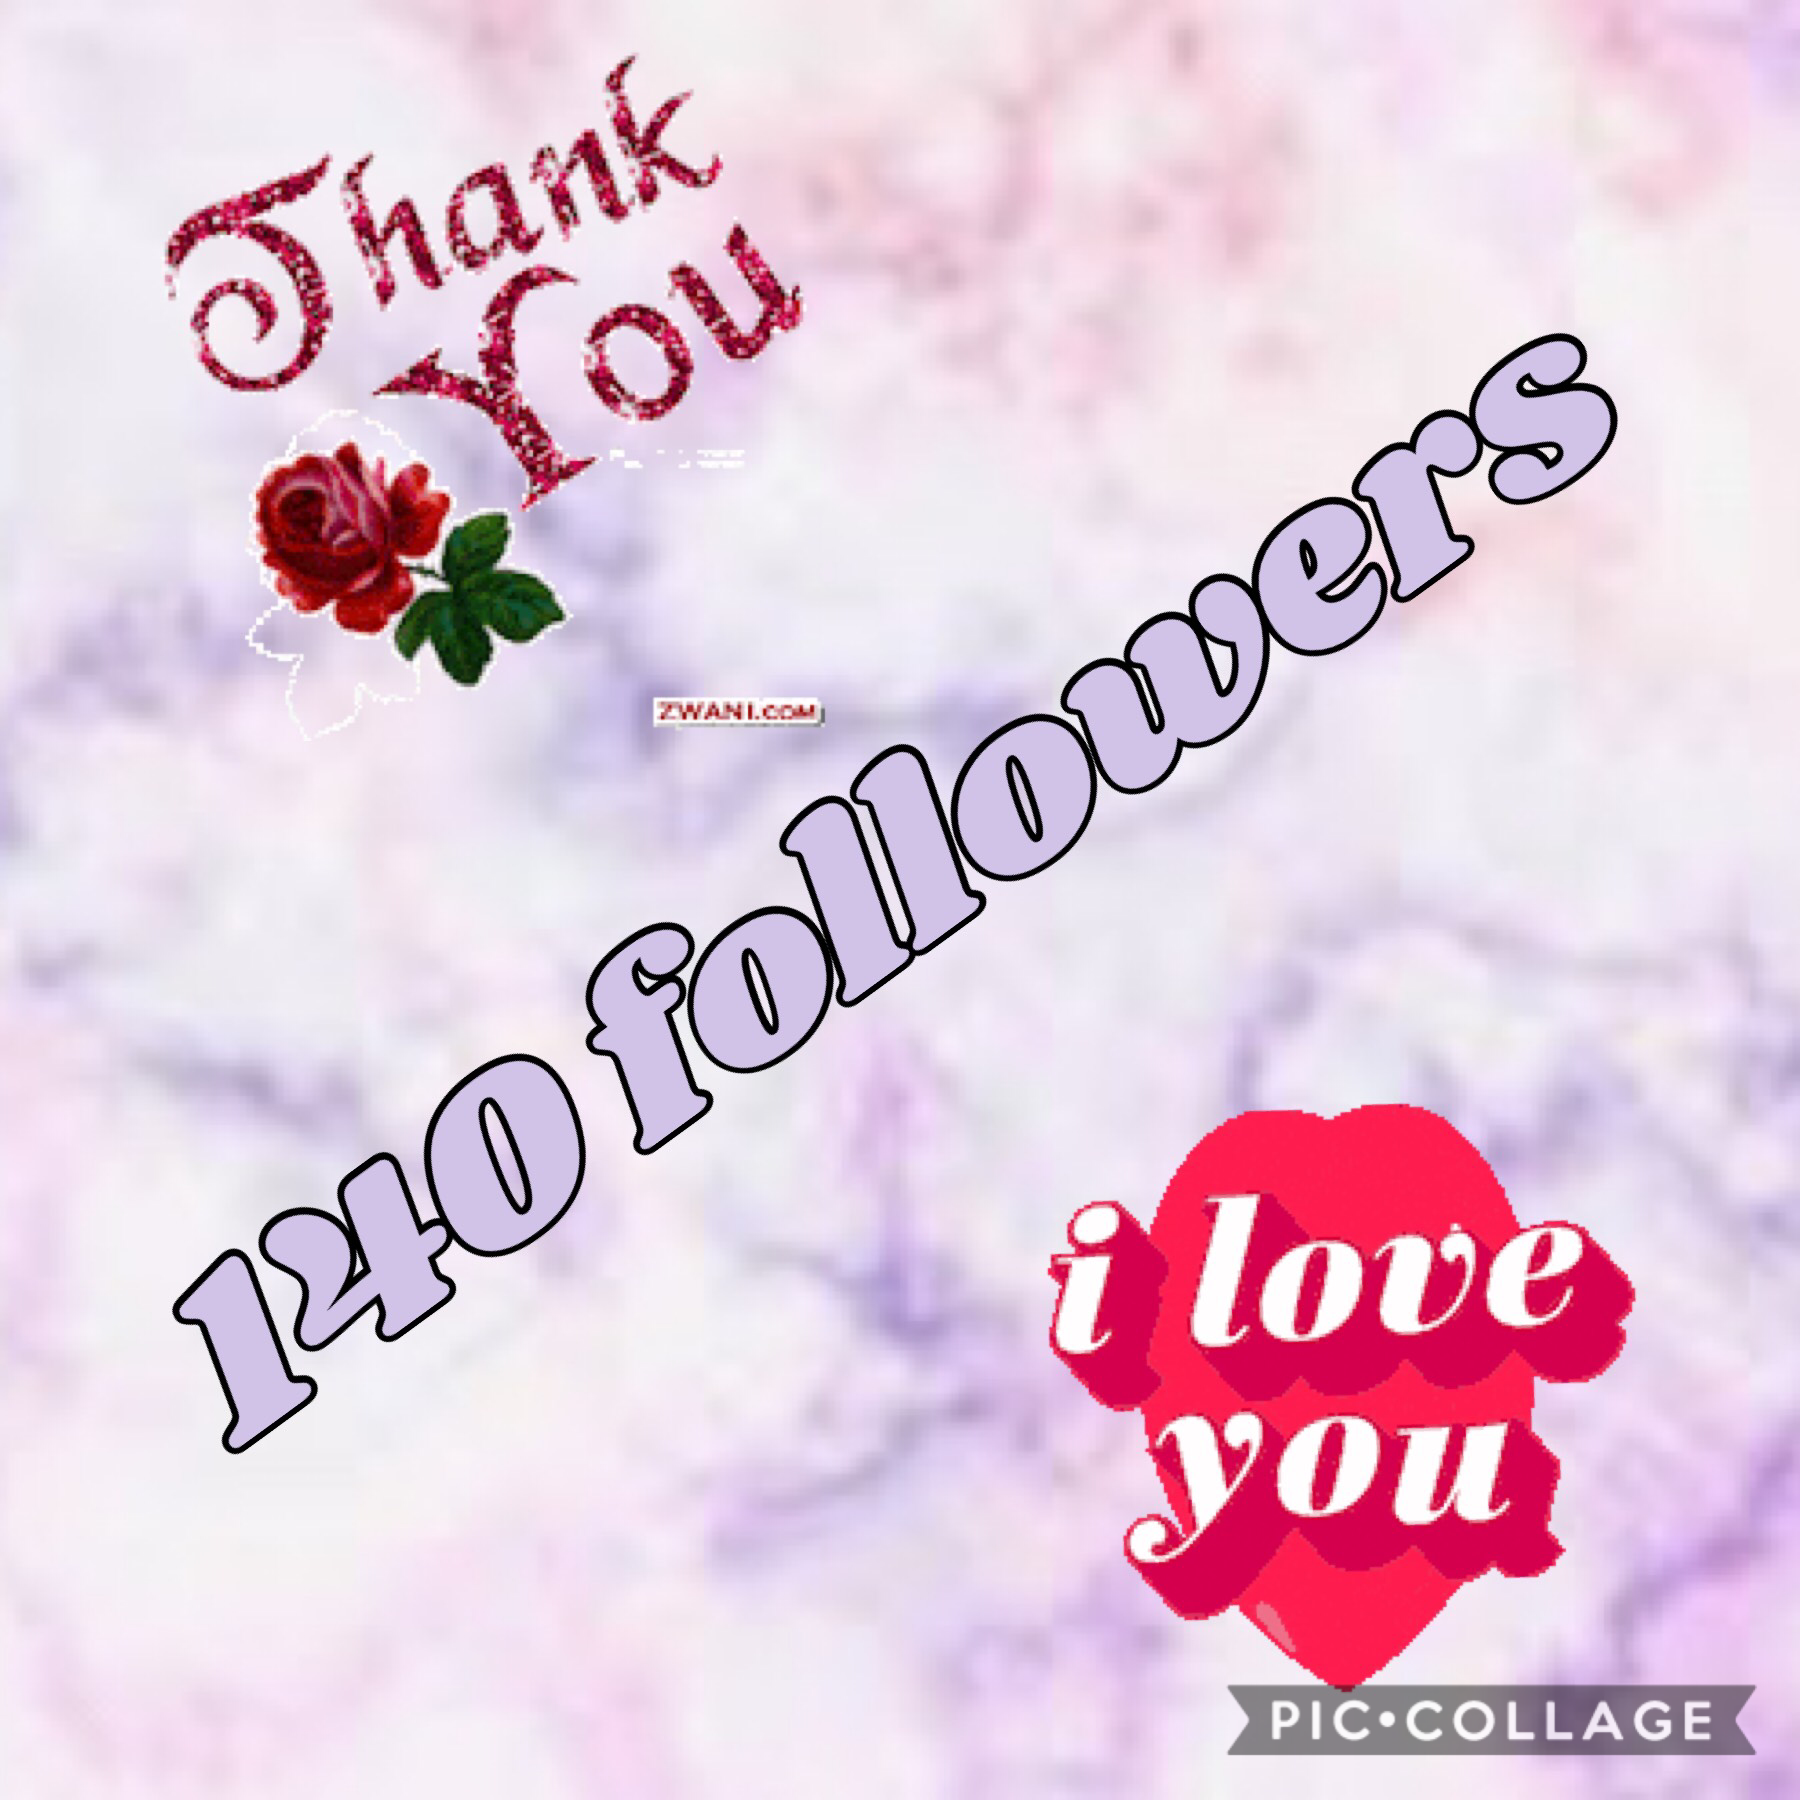 THANKS ❤️🧡💛💚💙💜 love ya 💖